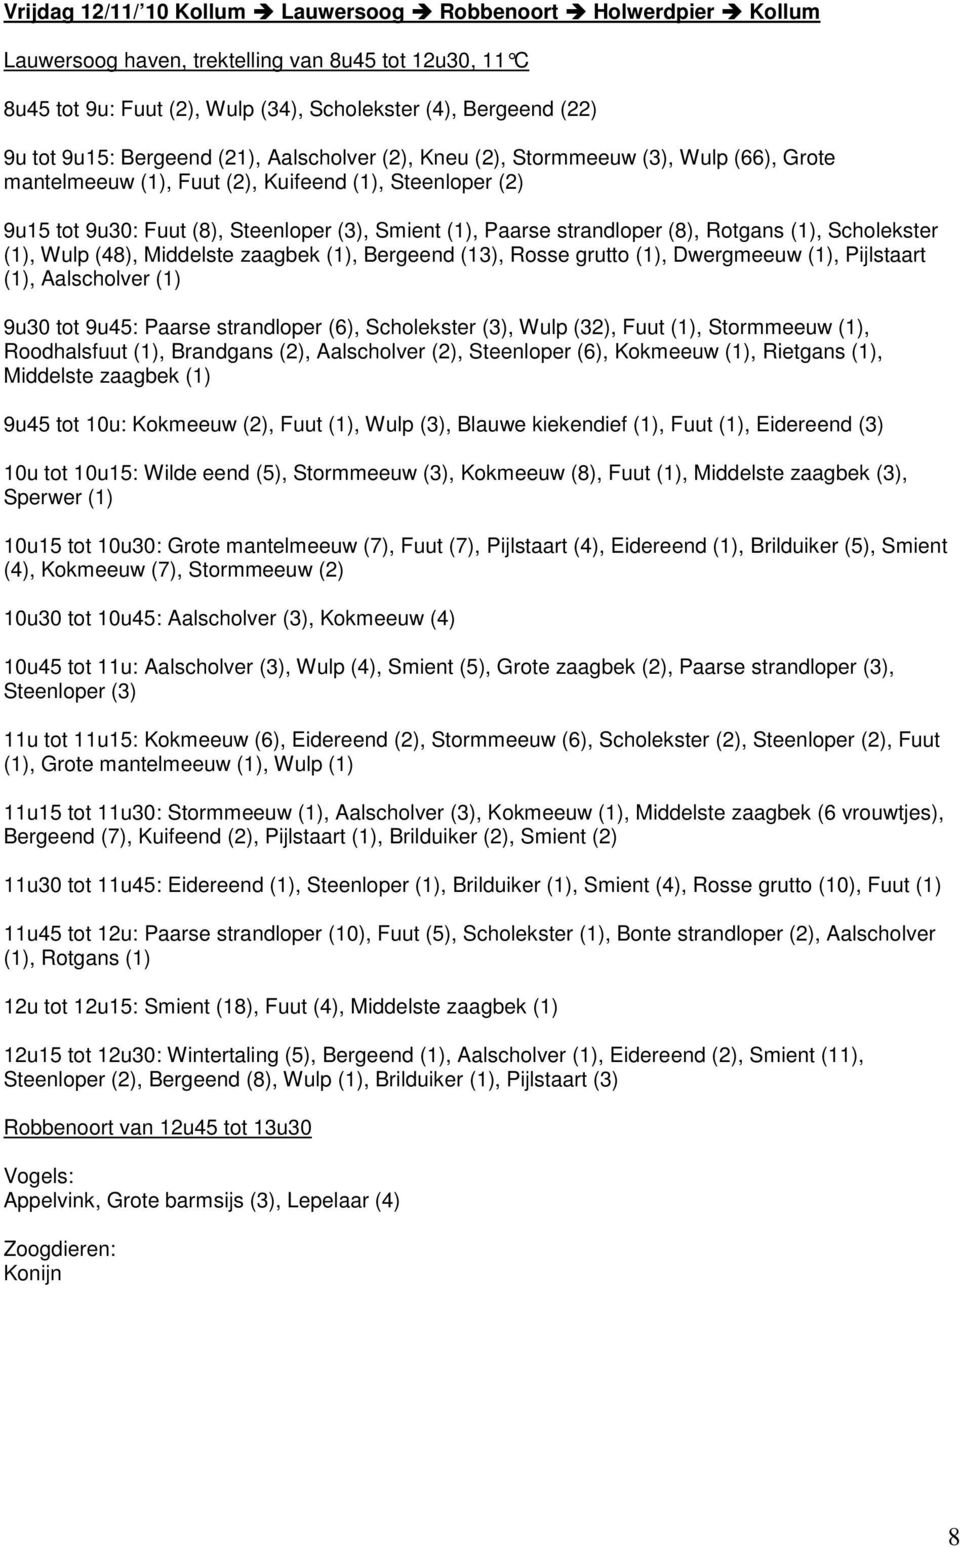 strandloper (8), Rotgans (1), Scholekster (1), Wulp (48), Middelste zaagbek (1), Bergeend (13), Rosse grutto (1), Dwergmeeuw (1), Pijlstaart (1), Aalscholver (1) 9u30 tot 9u45: Paarse strandloper